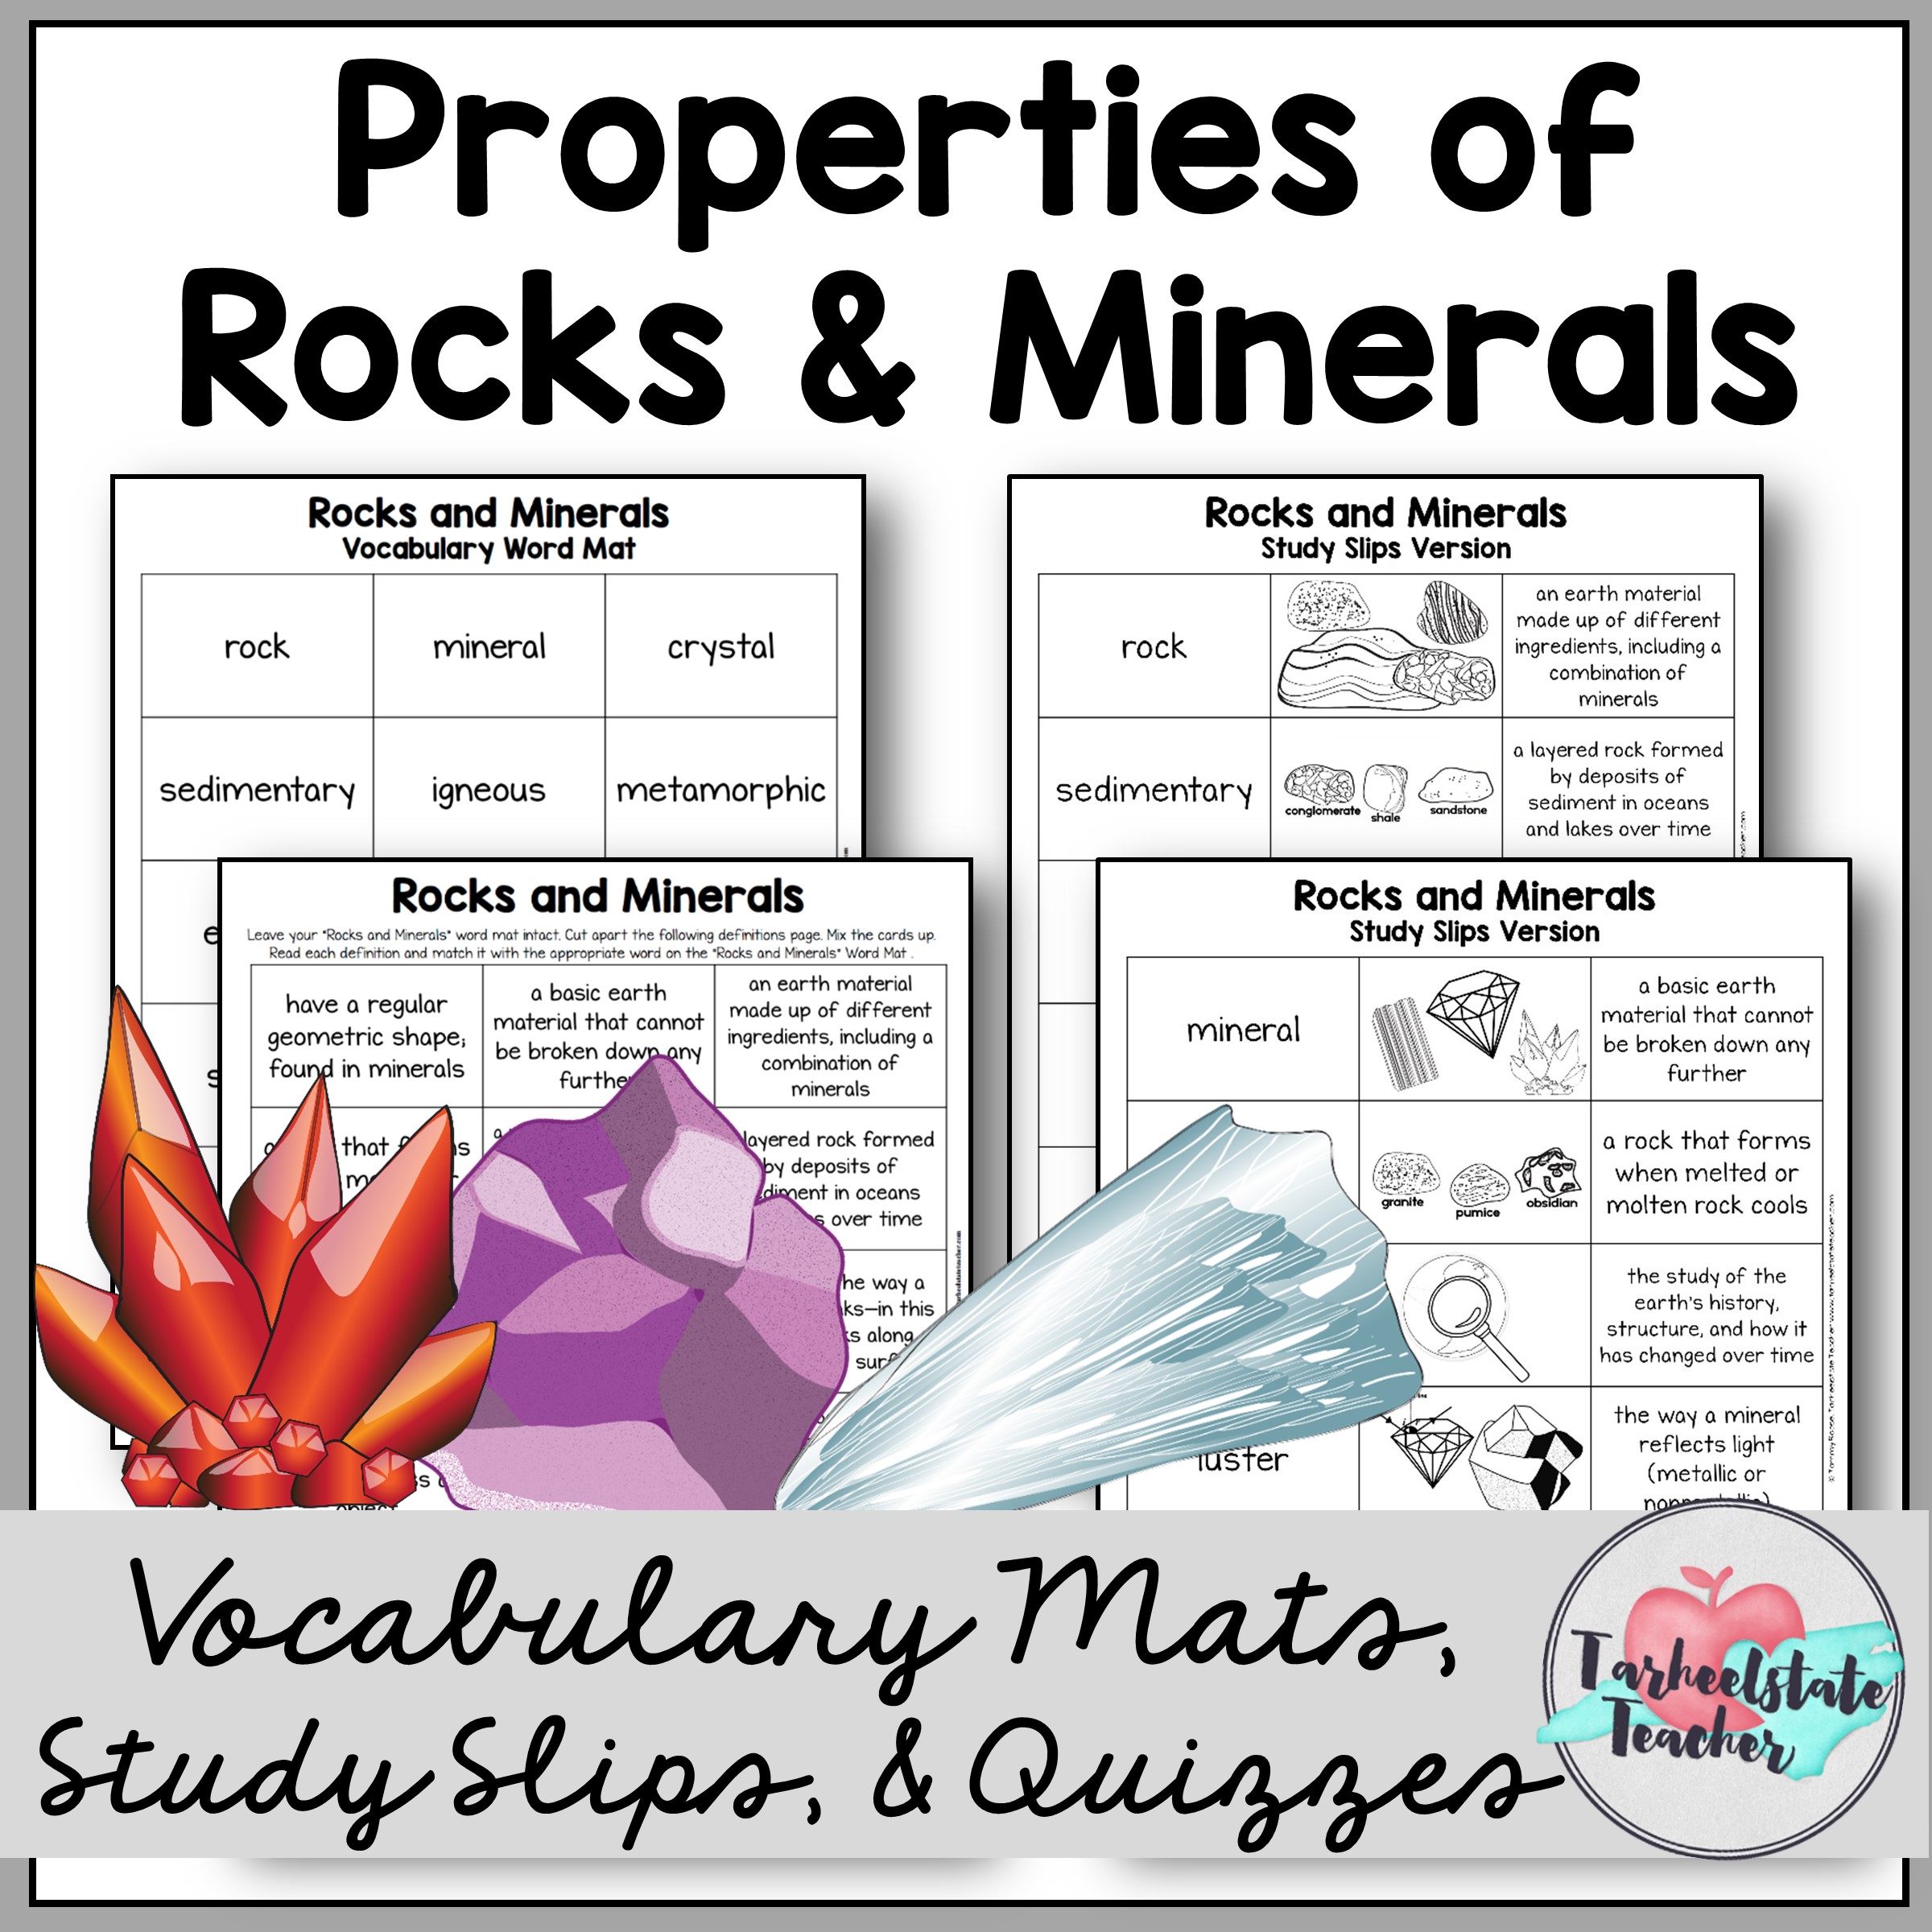 Rocks and Minerals Vocabulary Mats.JPG